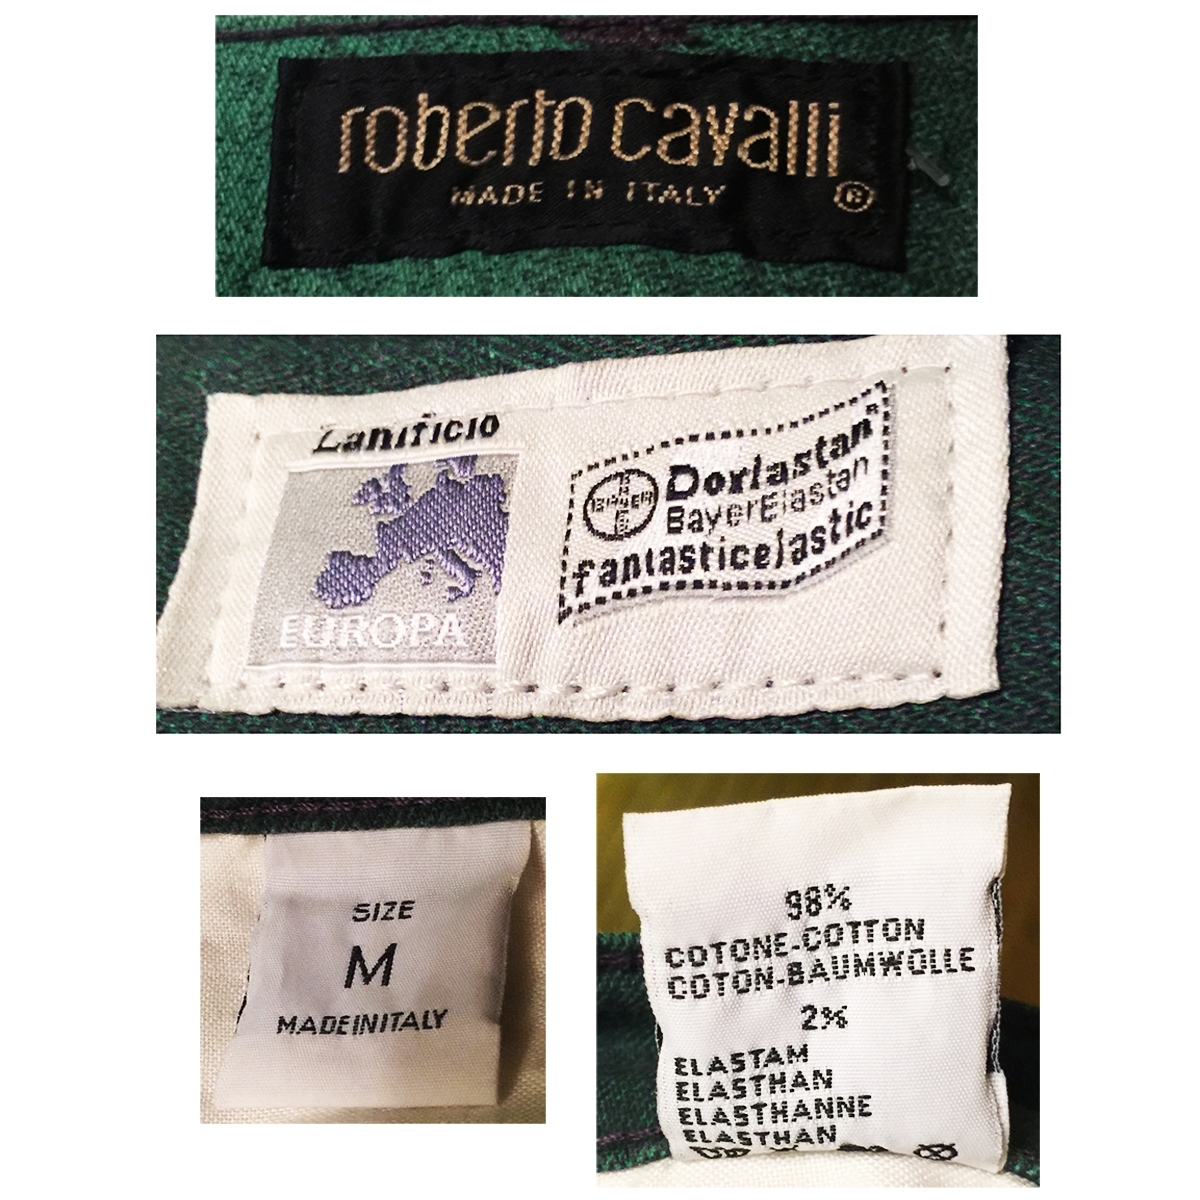 Vintage roberto cavalli label